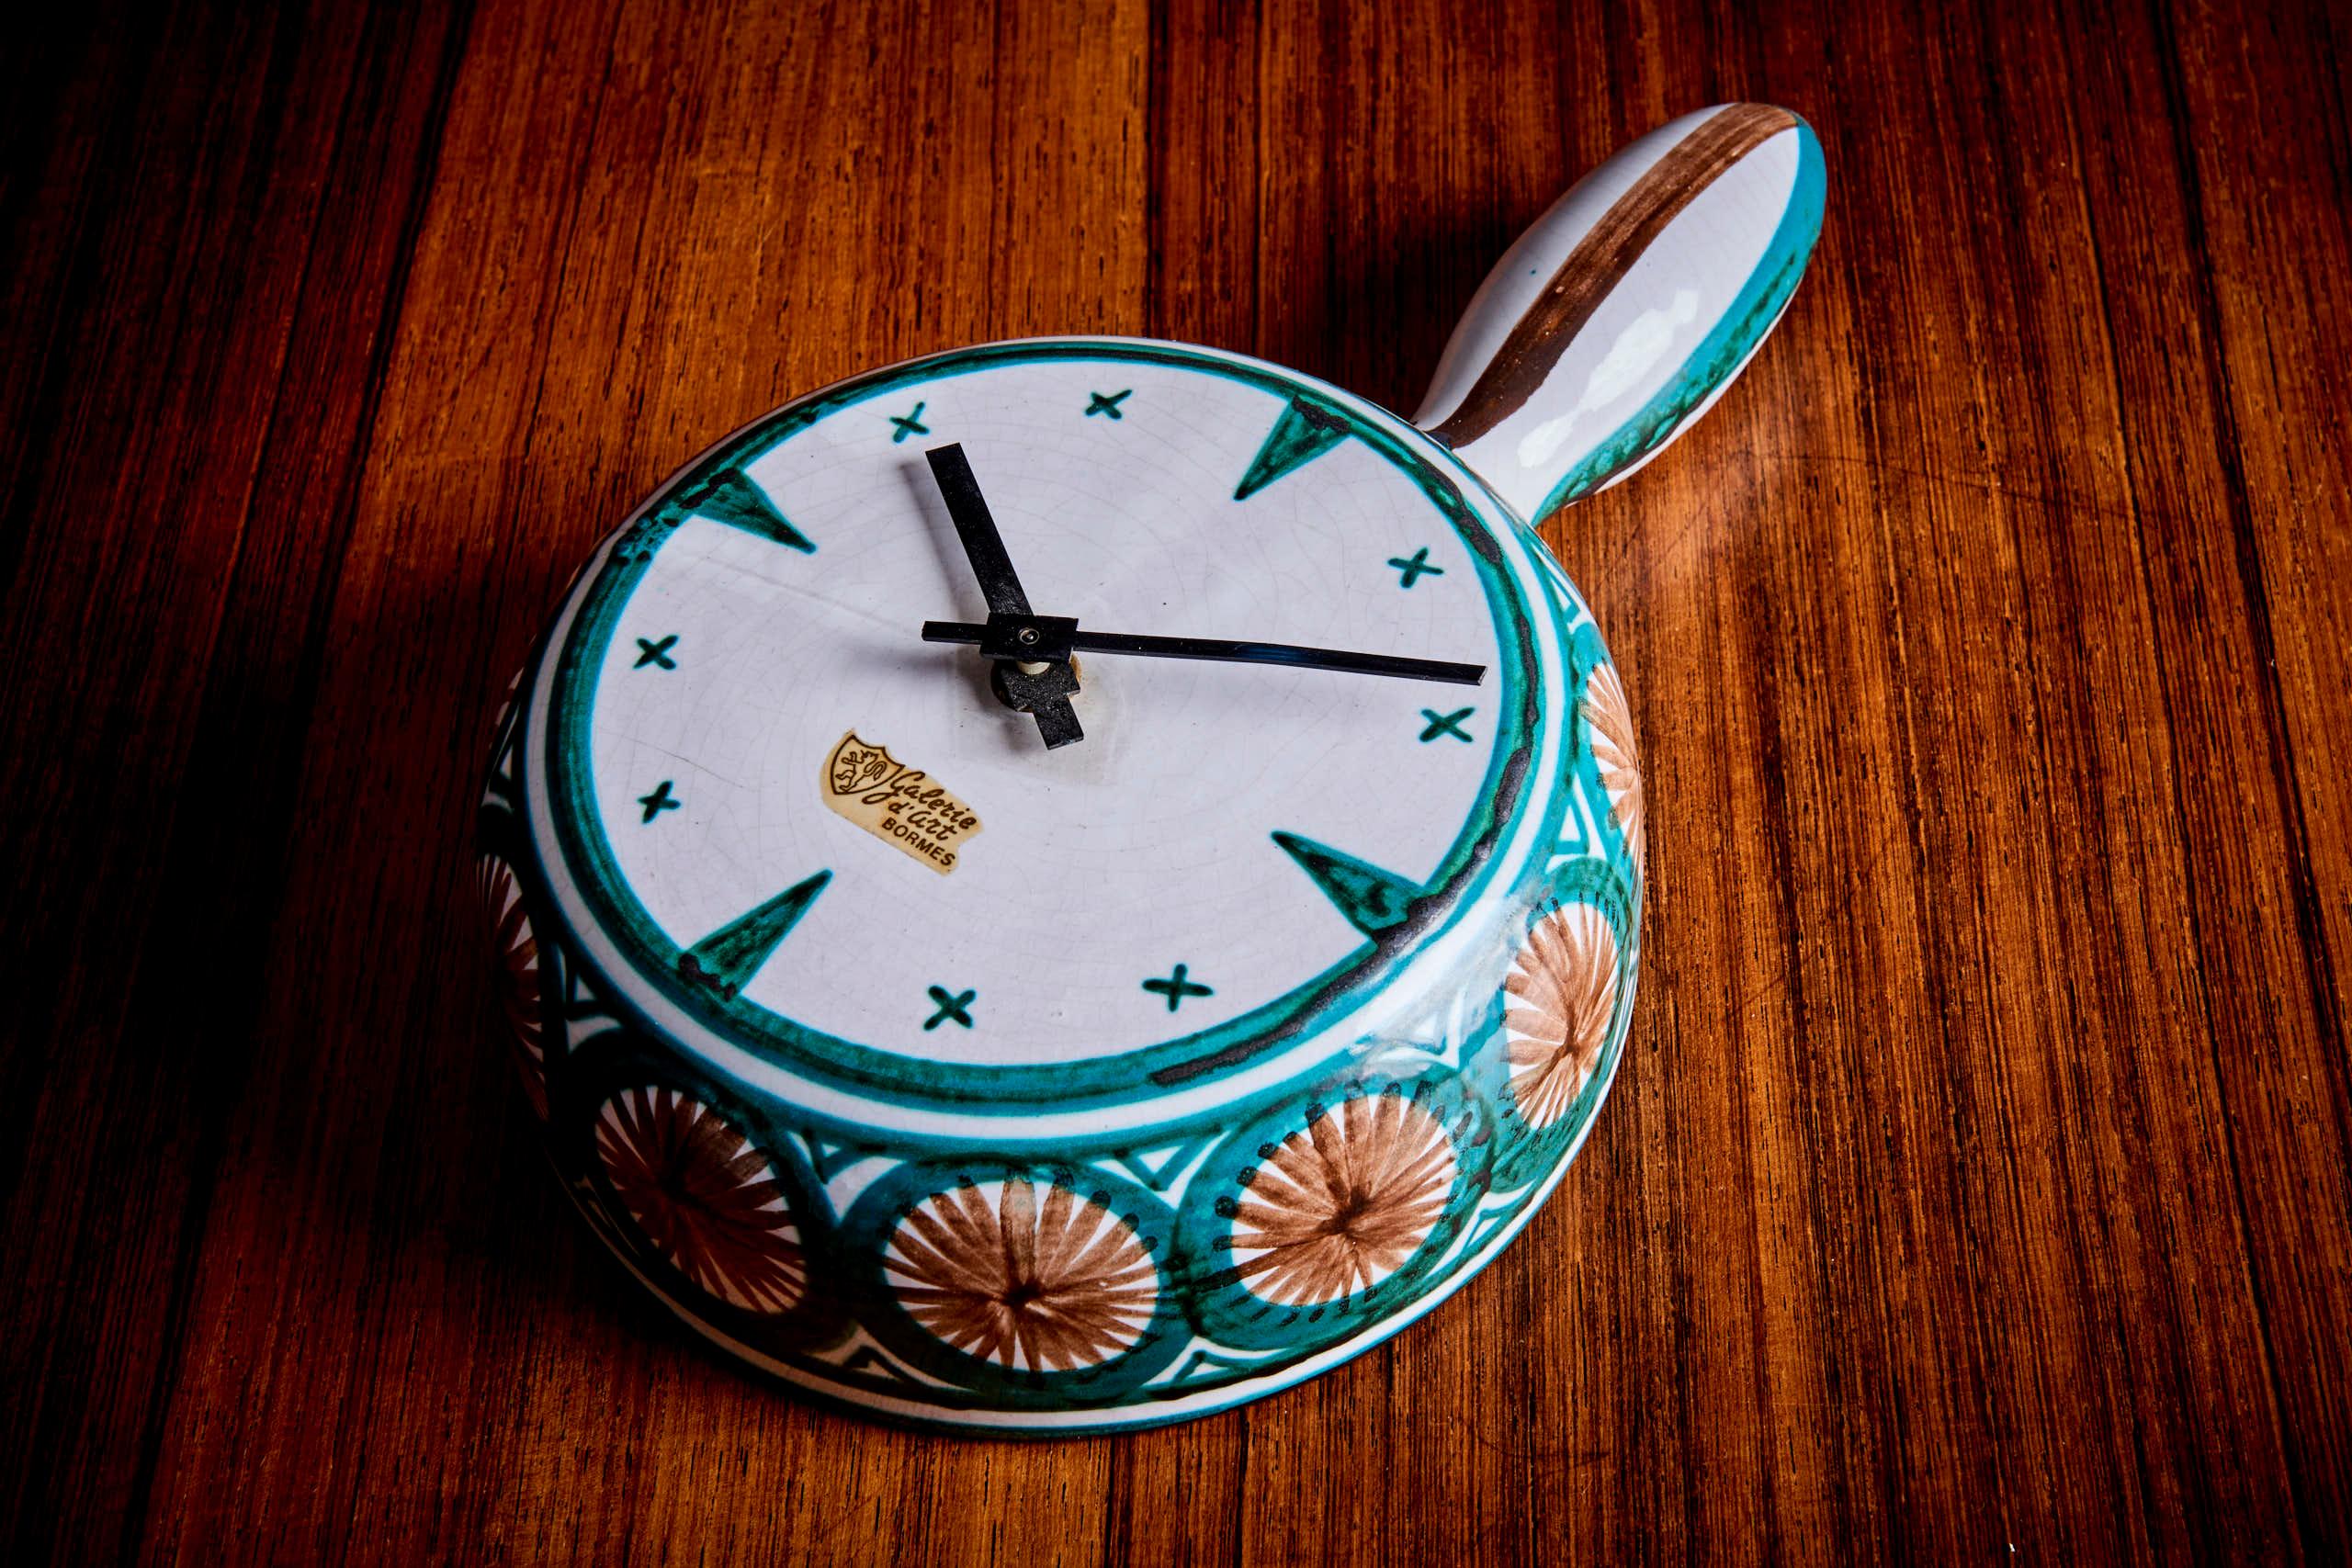 Robert Picault Ceramic Clock, France - 1950s.